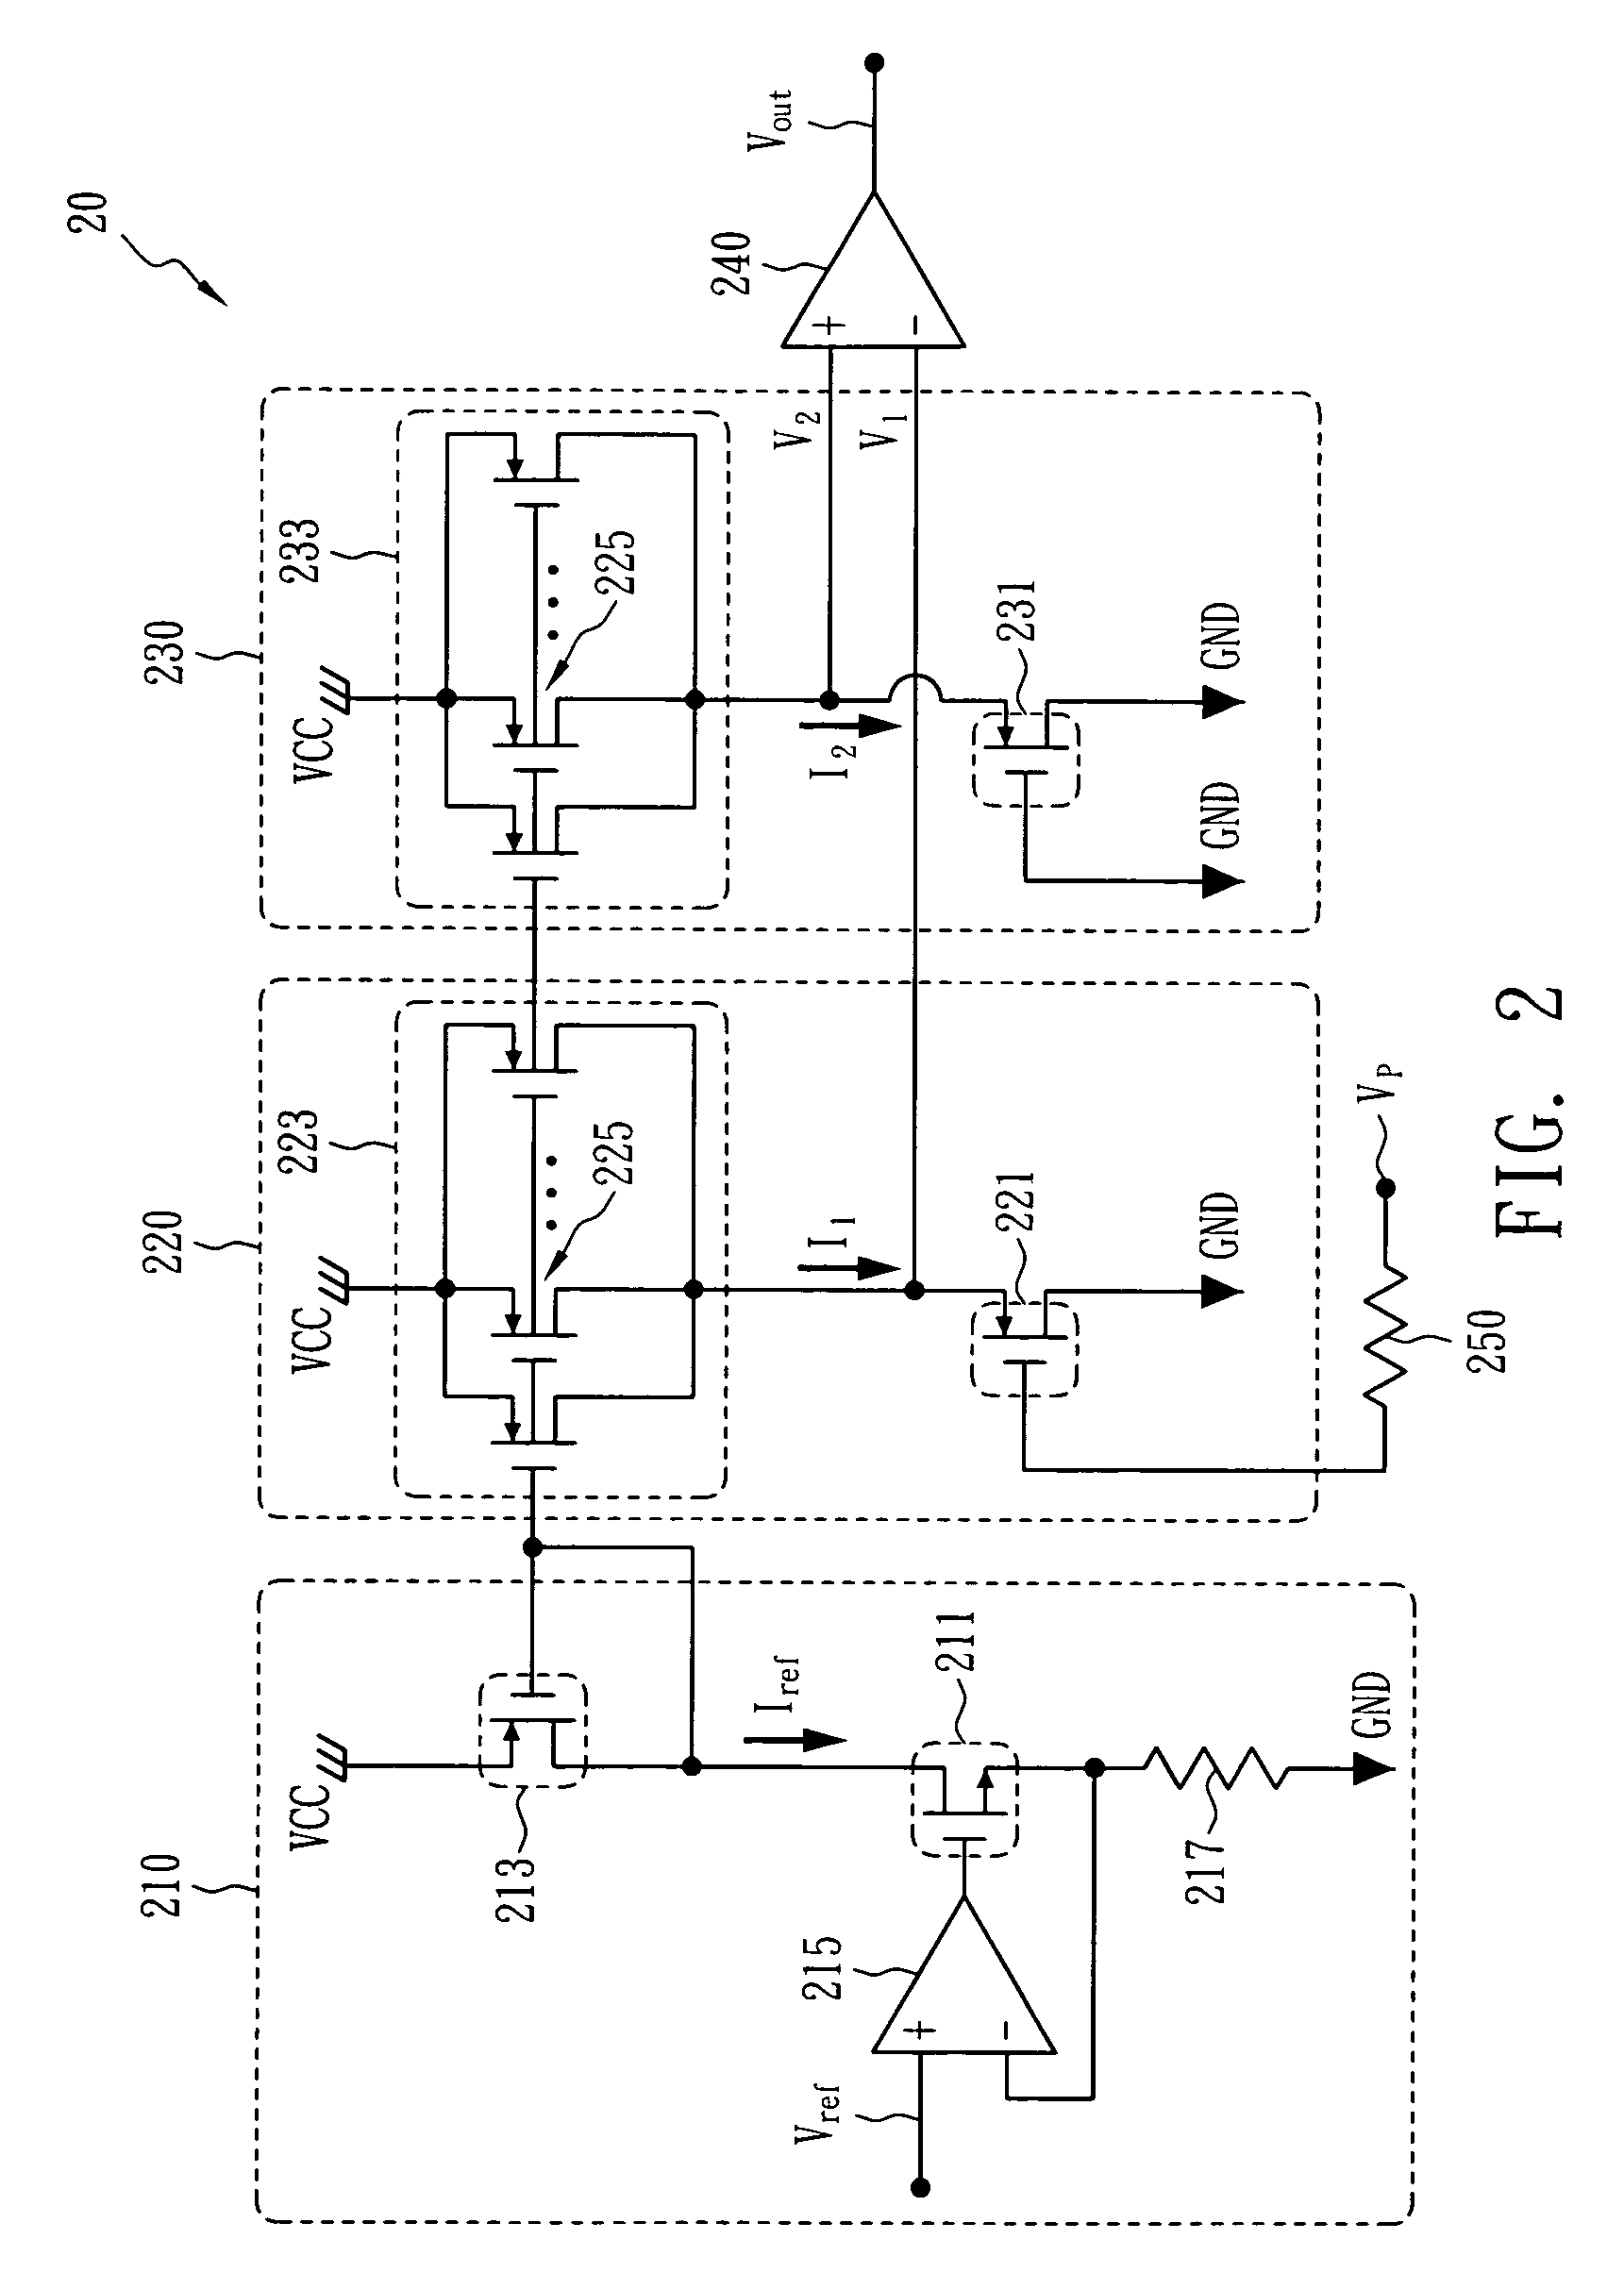 Negative voltage detection circuit for synchronous rectifier mosfet